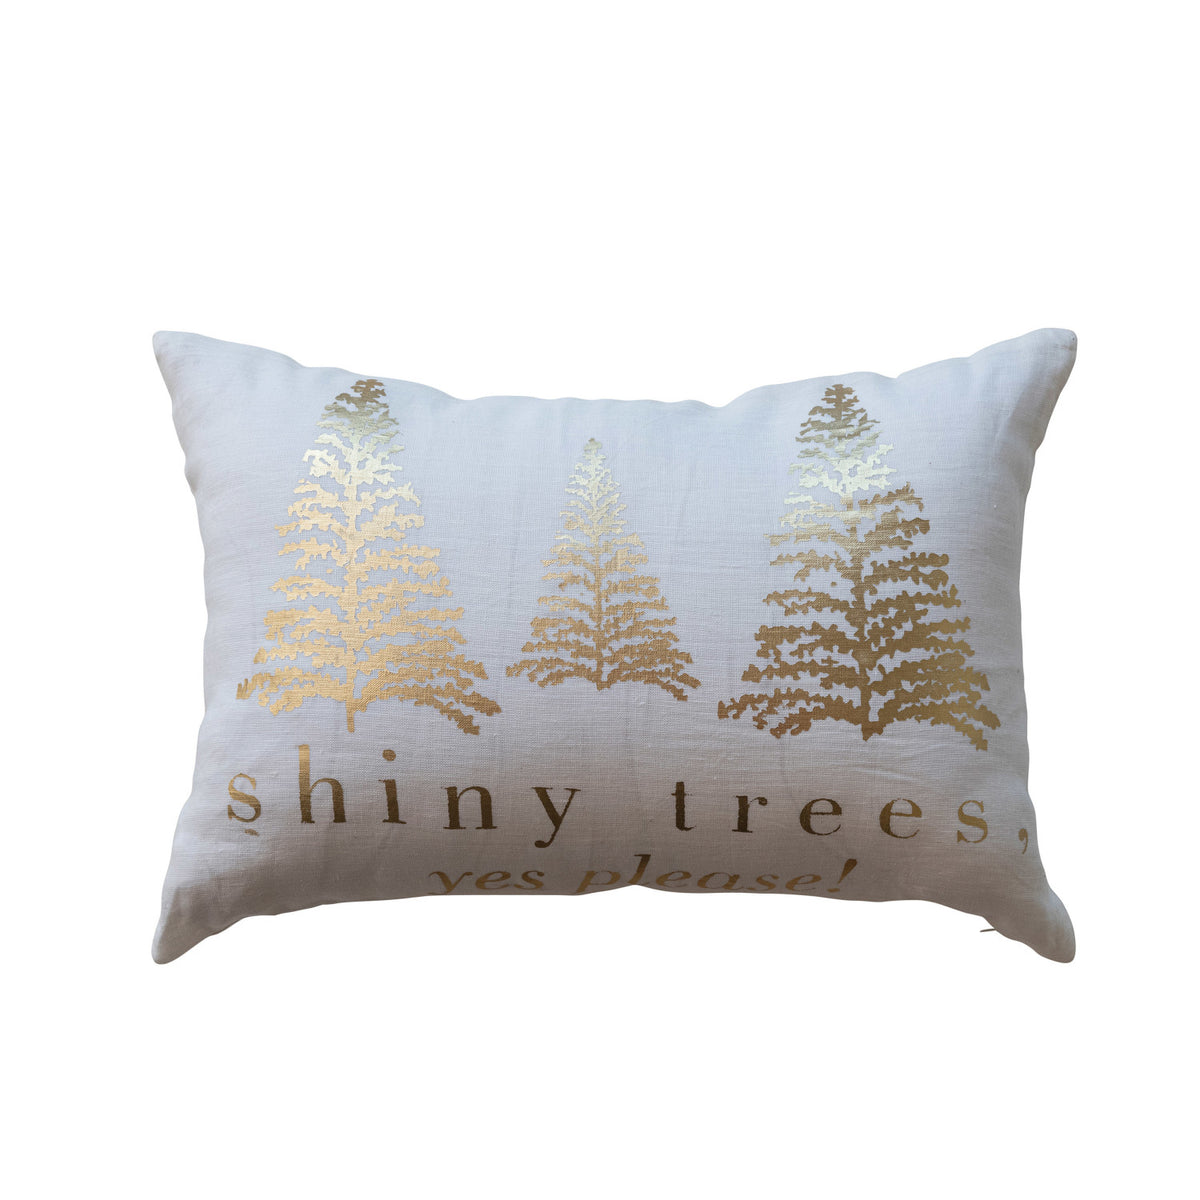 20"L x 14"H Linen & Cotton Lumbar Pillow w/ Foil Printed Trees